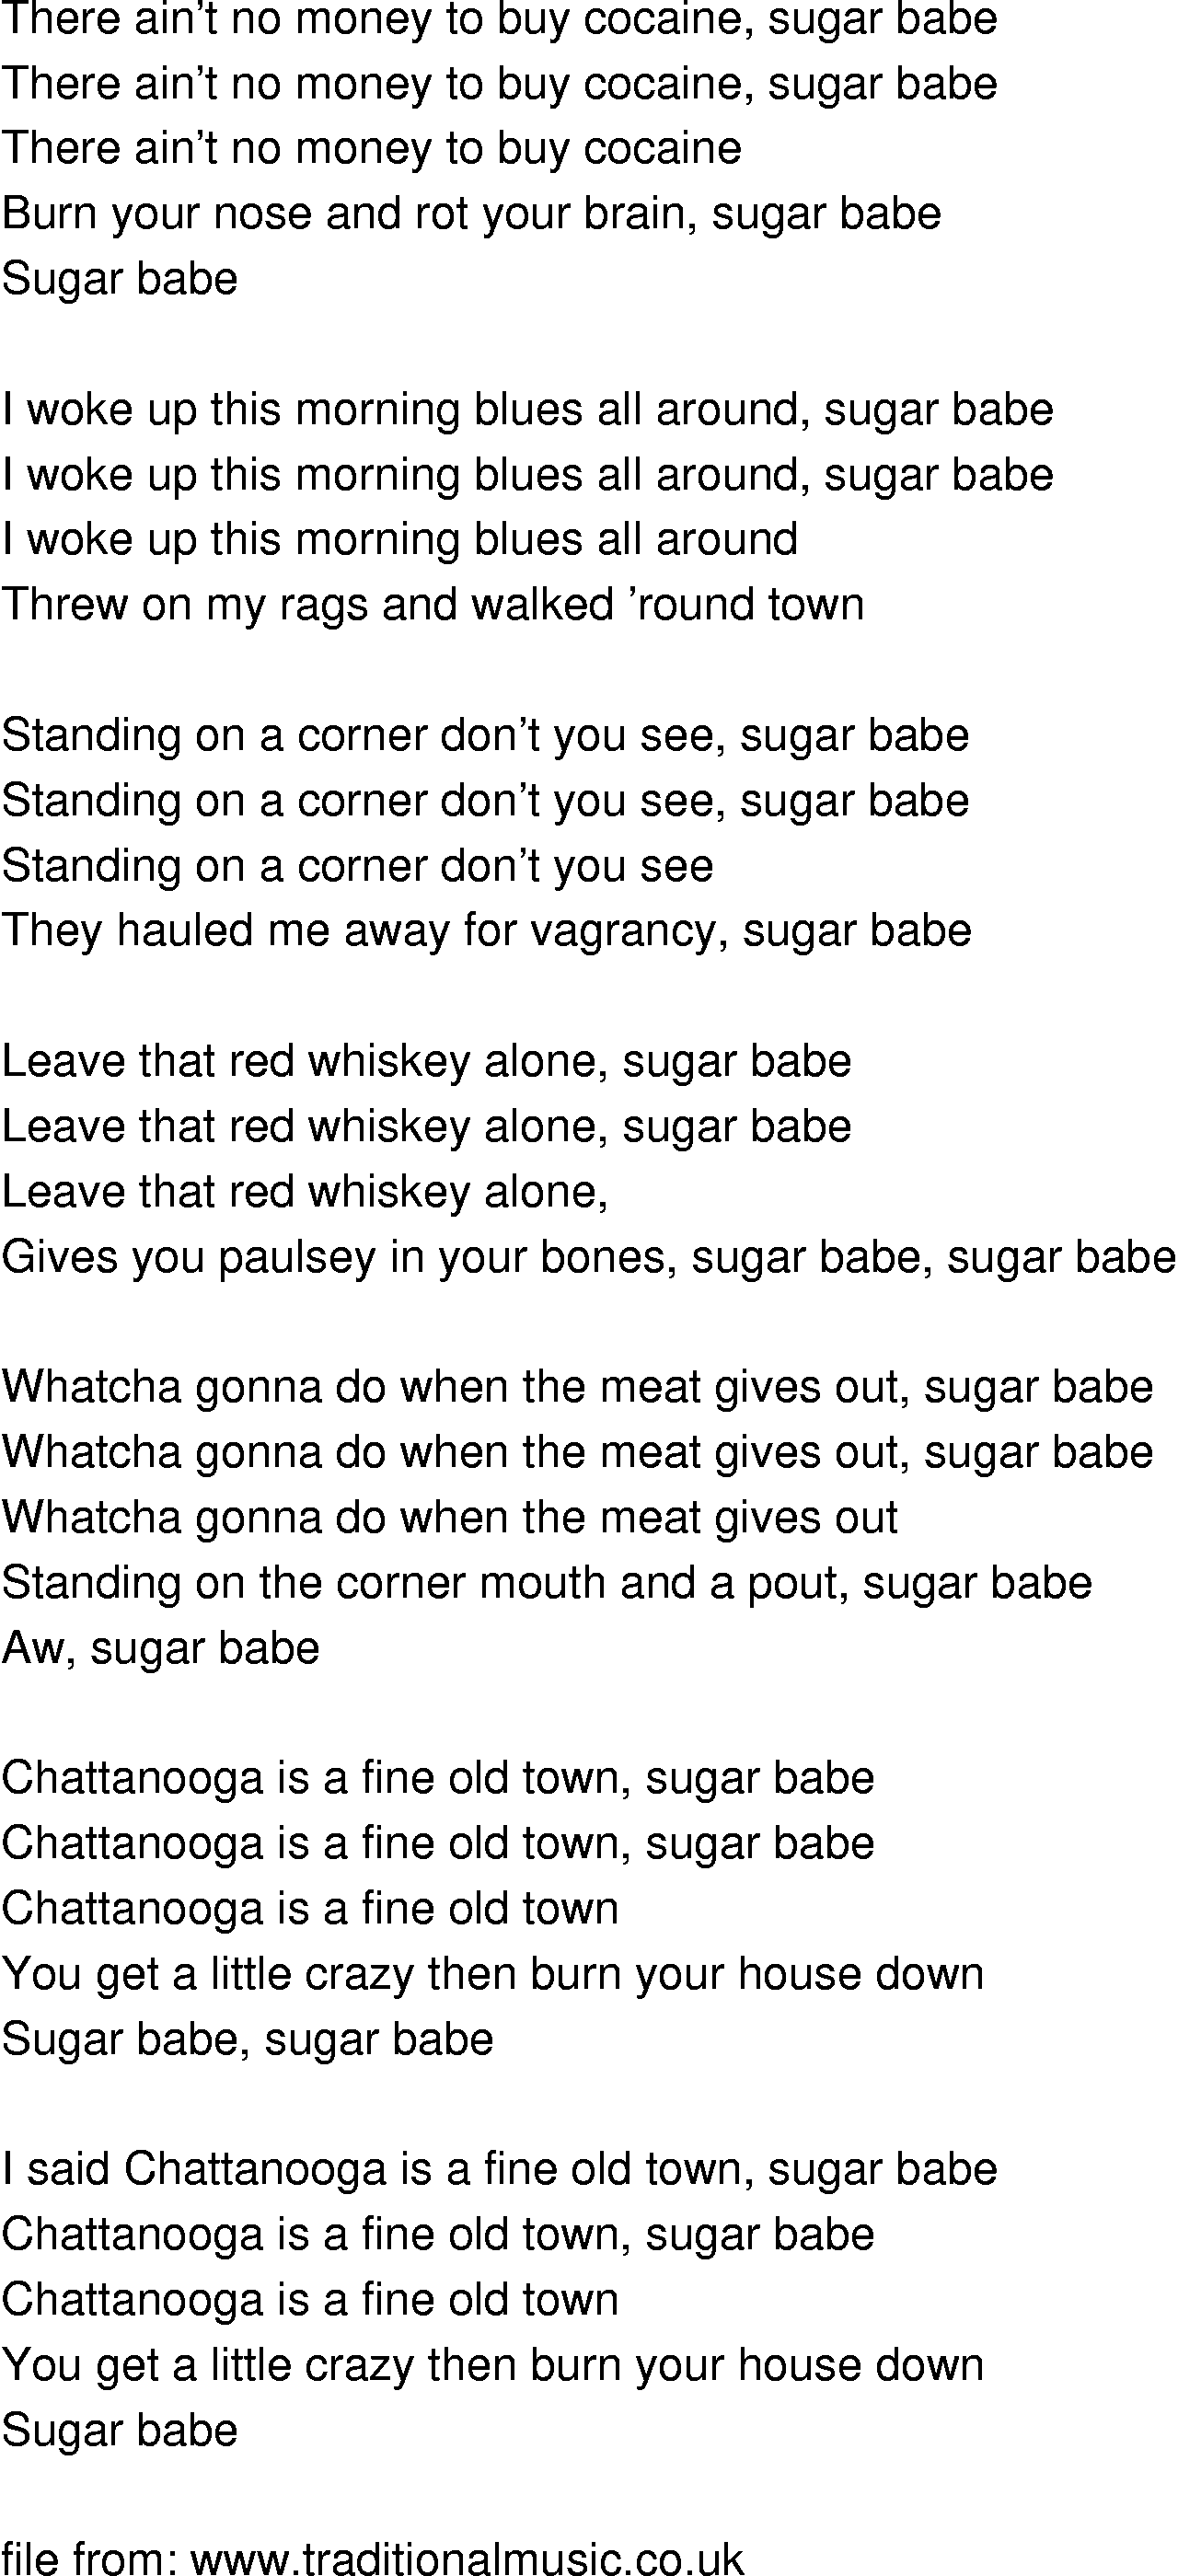 Old-Time (oldtimey) Song Lyrics - sugar babe